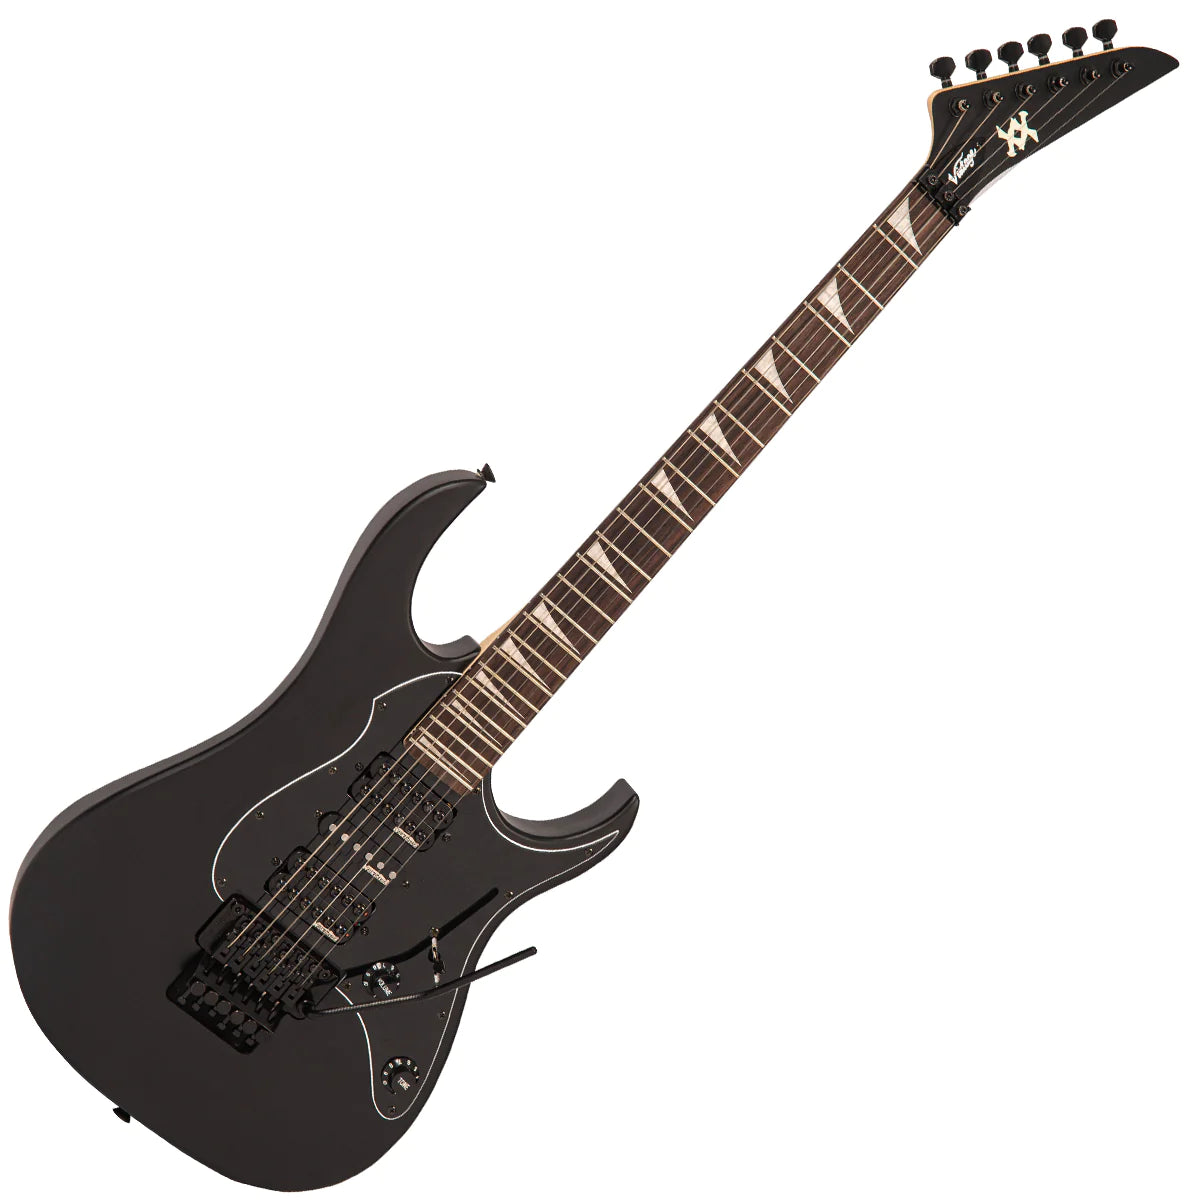 Vintage VR2000 VMX Raider Electric Guitar | Satin Black | VR2000 VMX Limited Edition